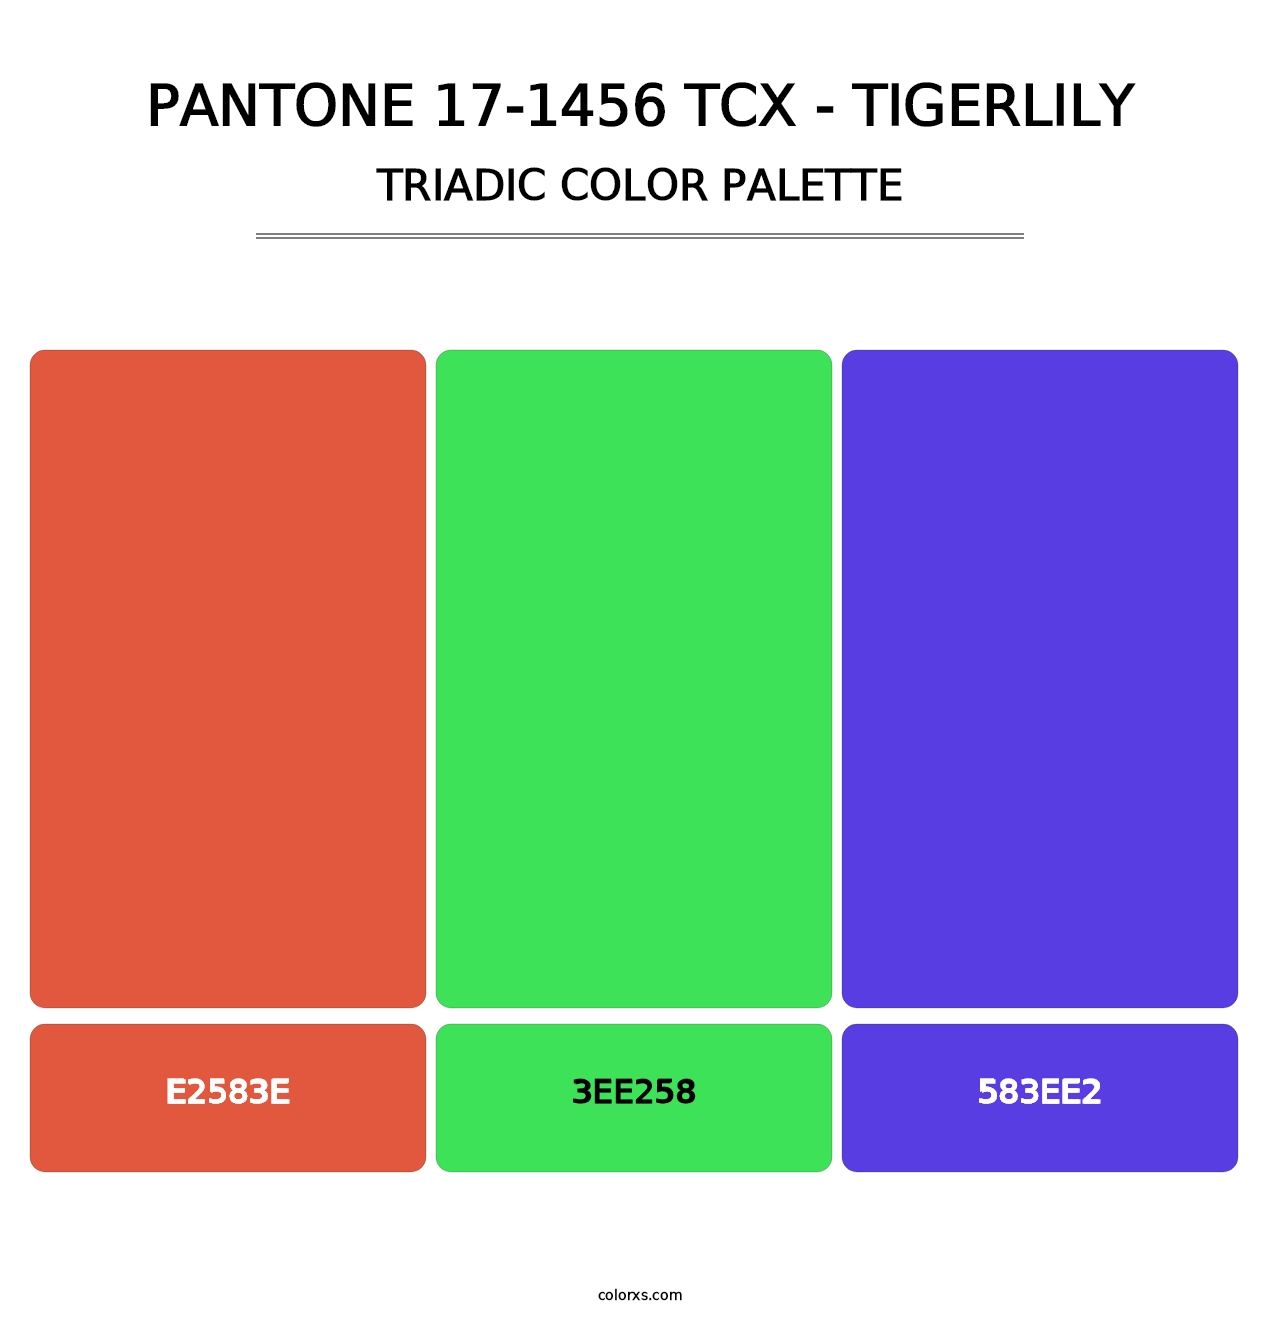 PANTONE 17-1456 TCX - Tigerlily - Triadic Color Palette